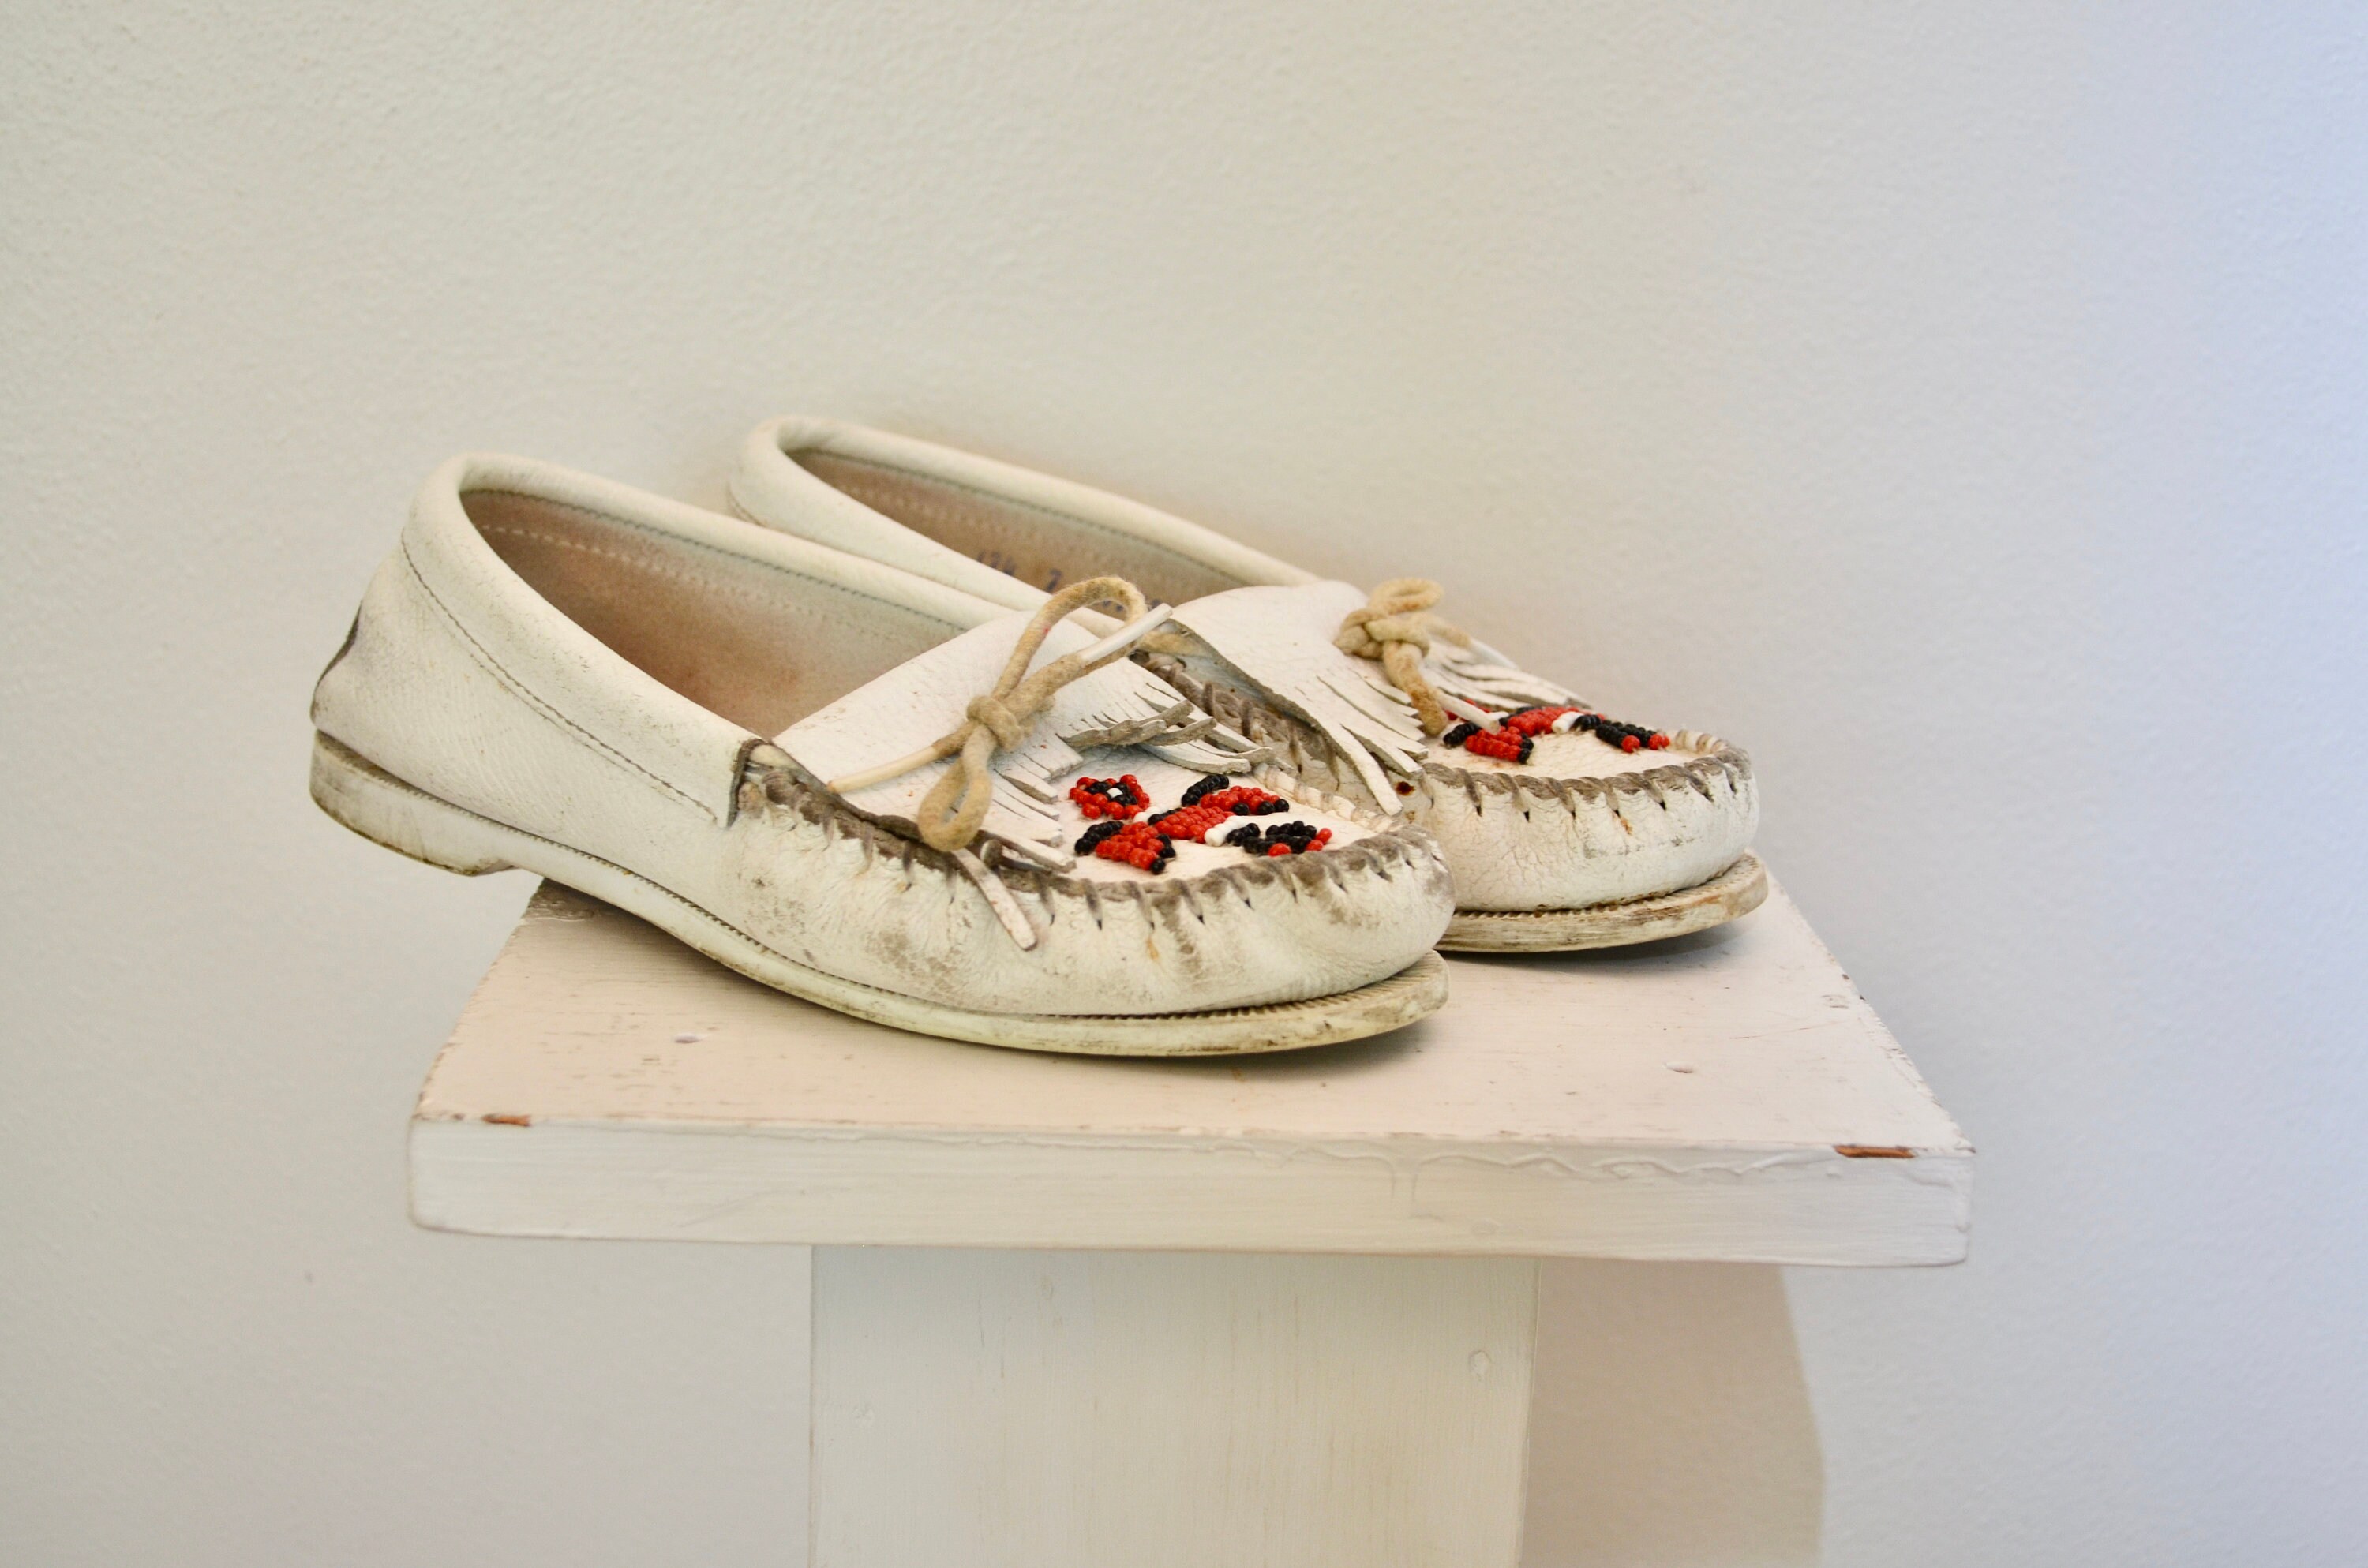 Vintage MINNETONKA Brown Leather Moccasins Slippers Shoes Size 7 Women Ship Free Schoenen damesschoenen Instappers Mocassins 